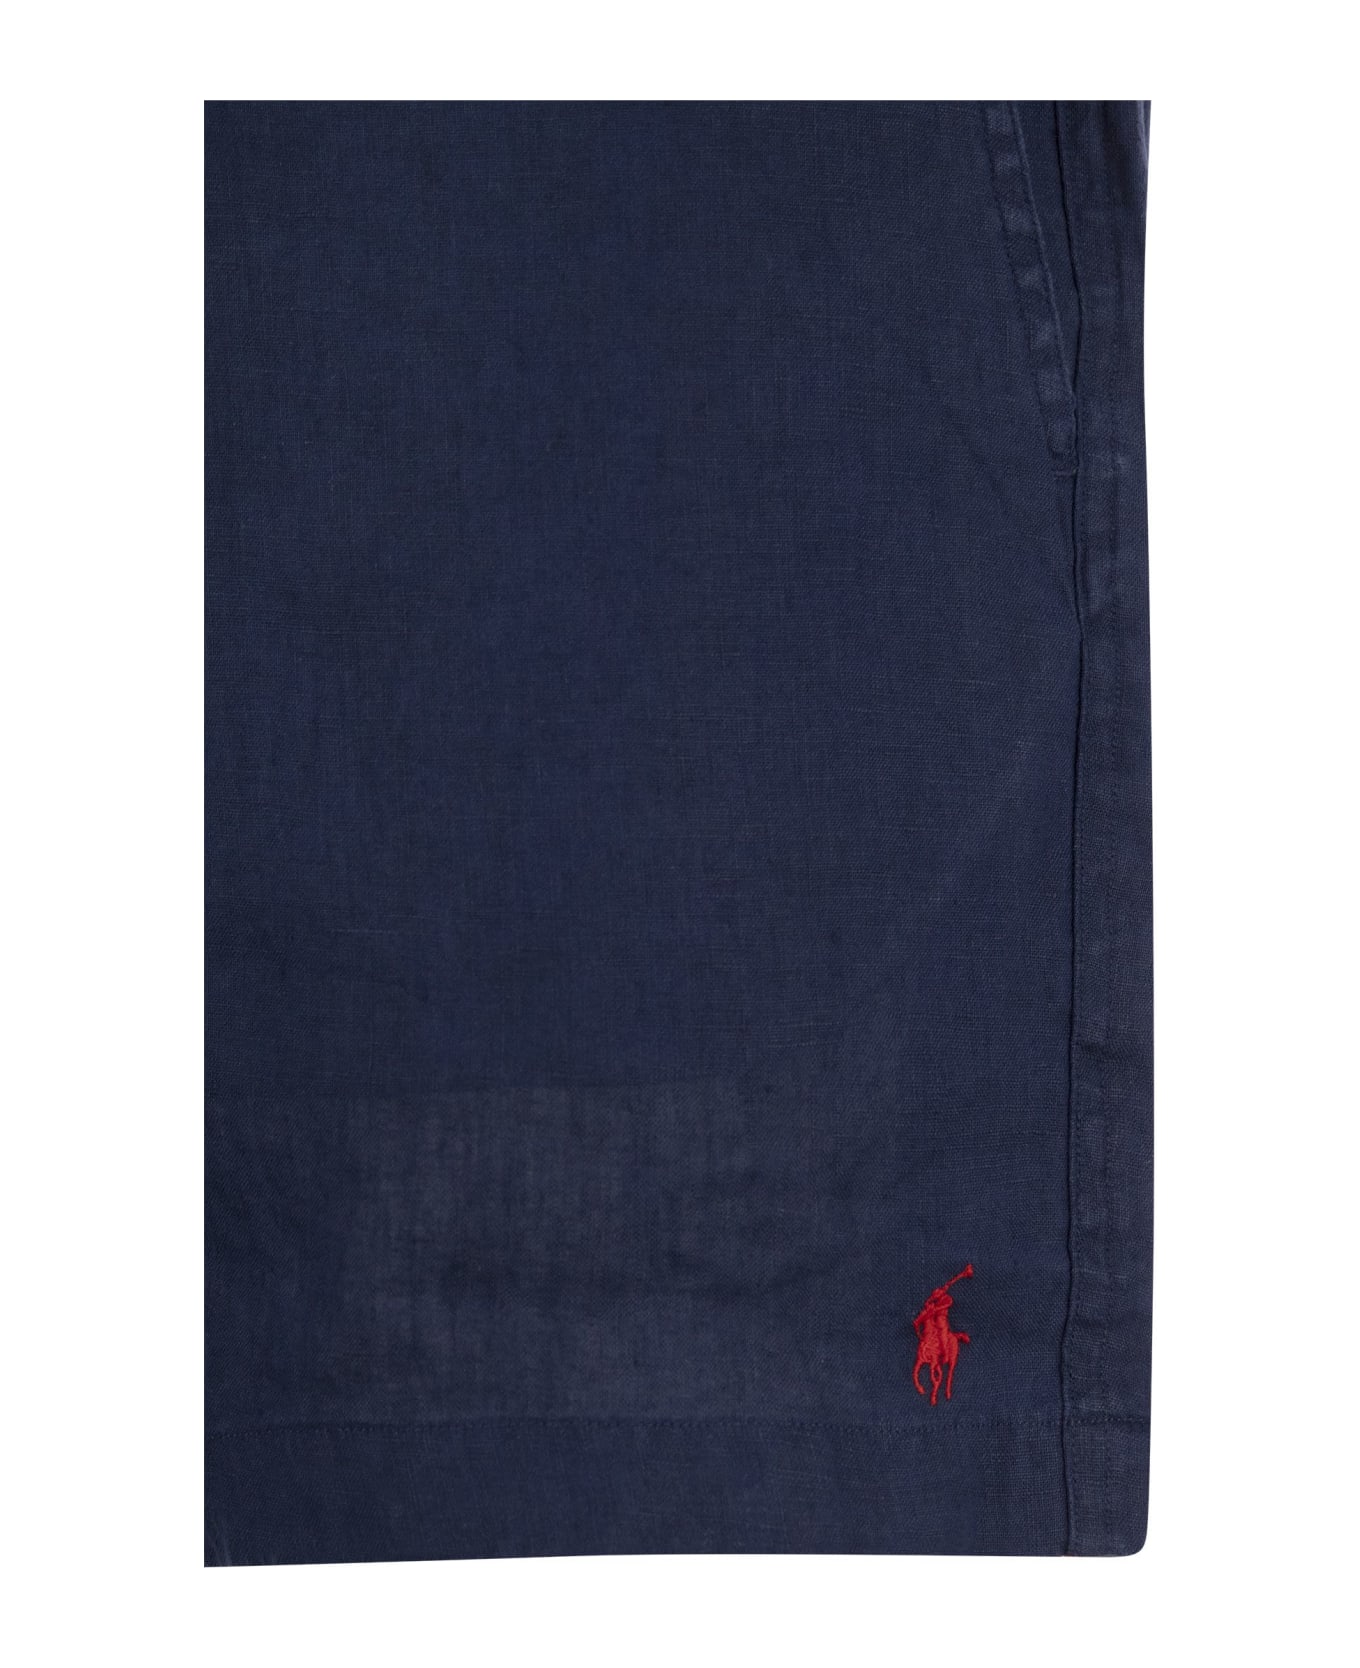 Polo Ralph Lauren Linen Prepster Polo Shorts - Navy ショートパンツ